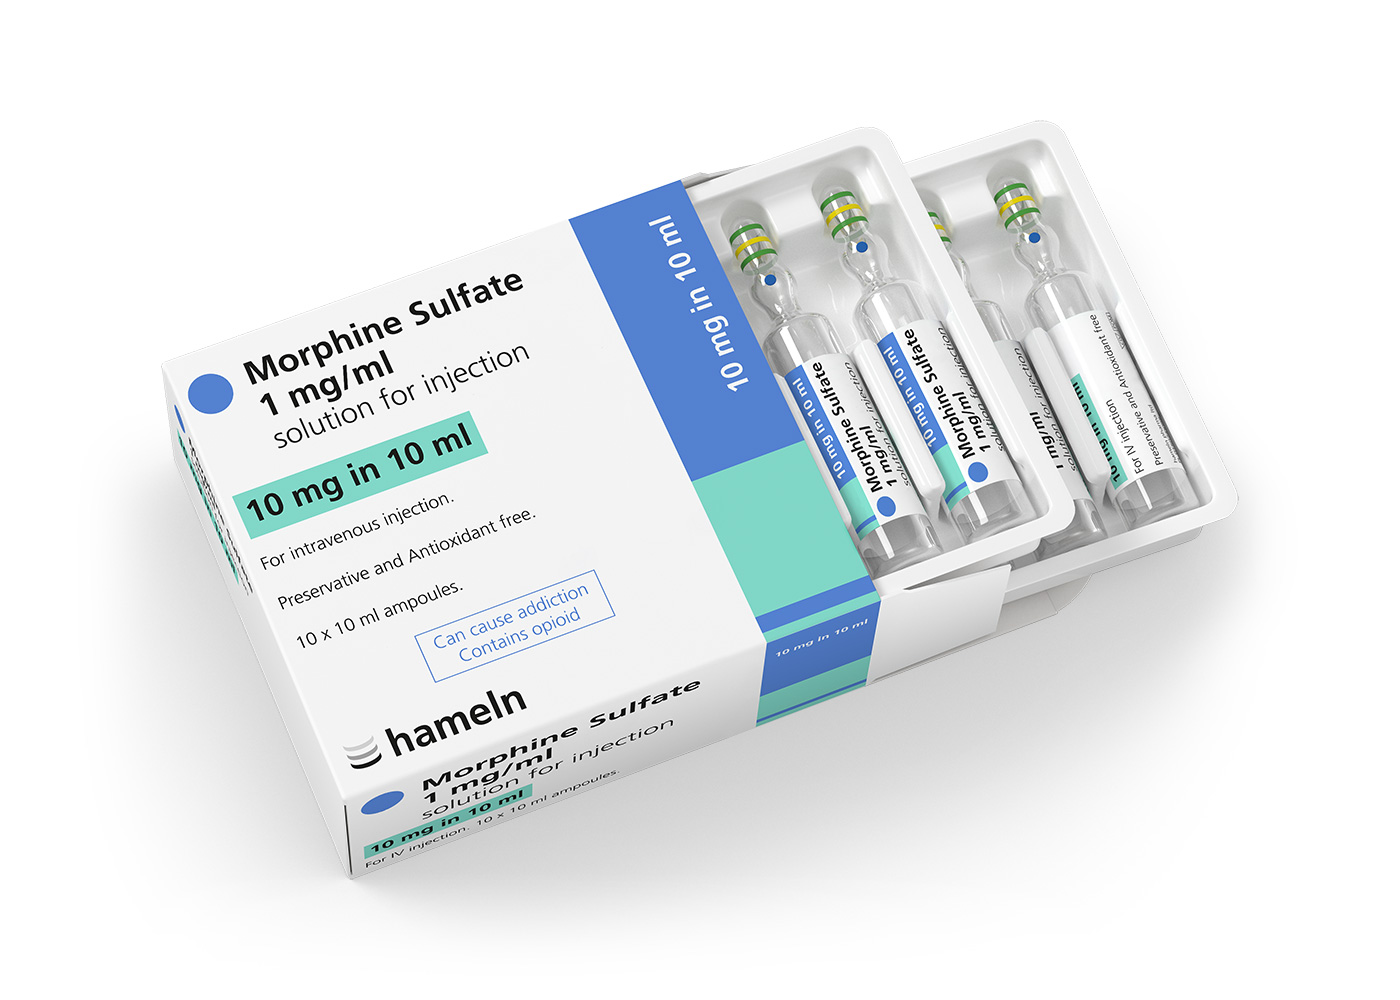 Morphine_UK_1_mg-ml_in_10_ml_Pack-Amp_10St_SH_2022-43